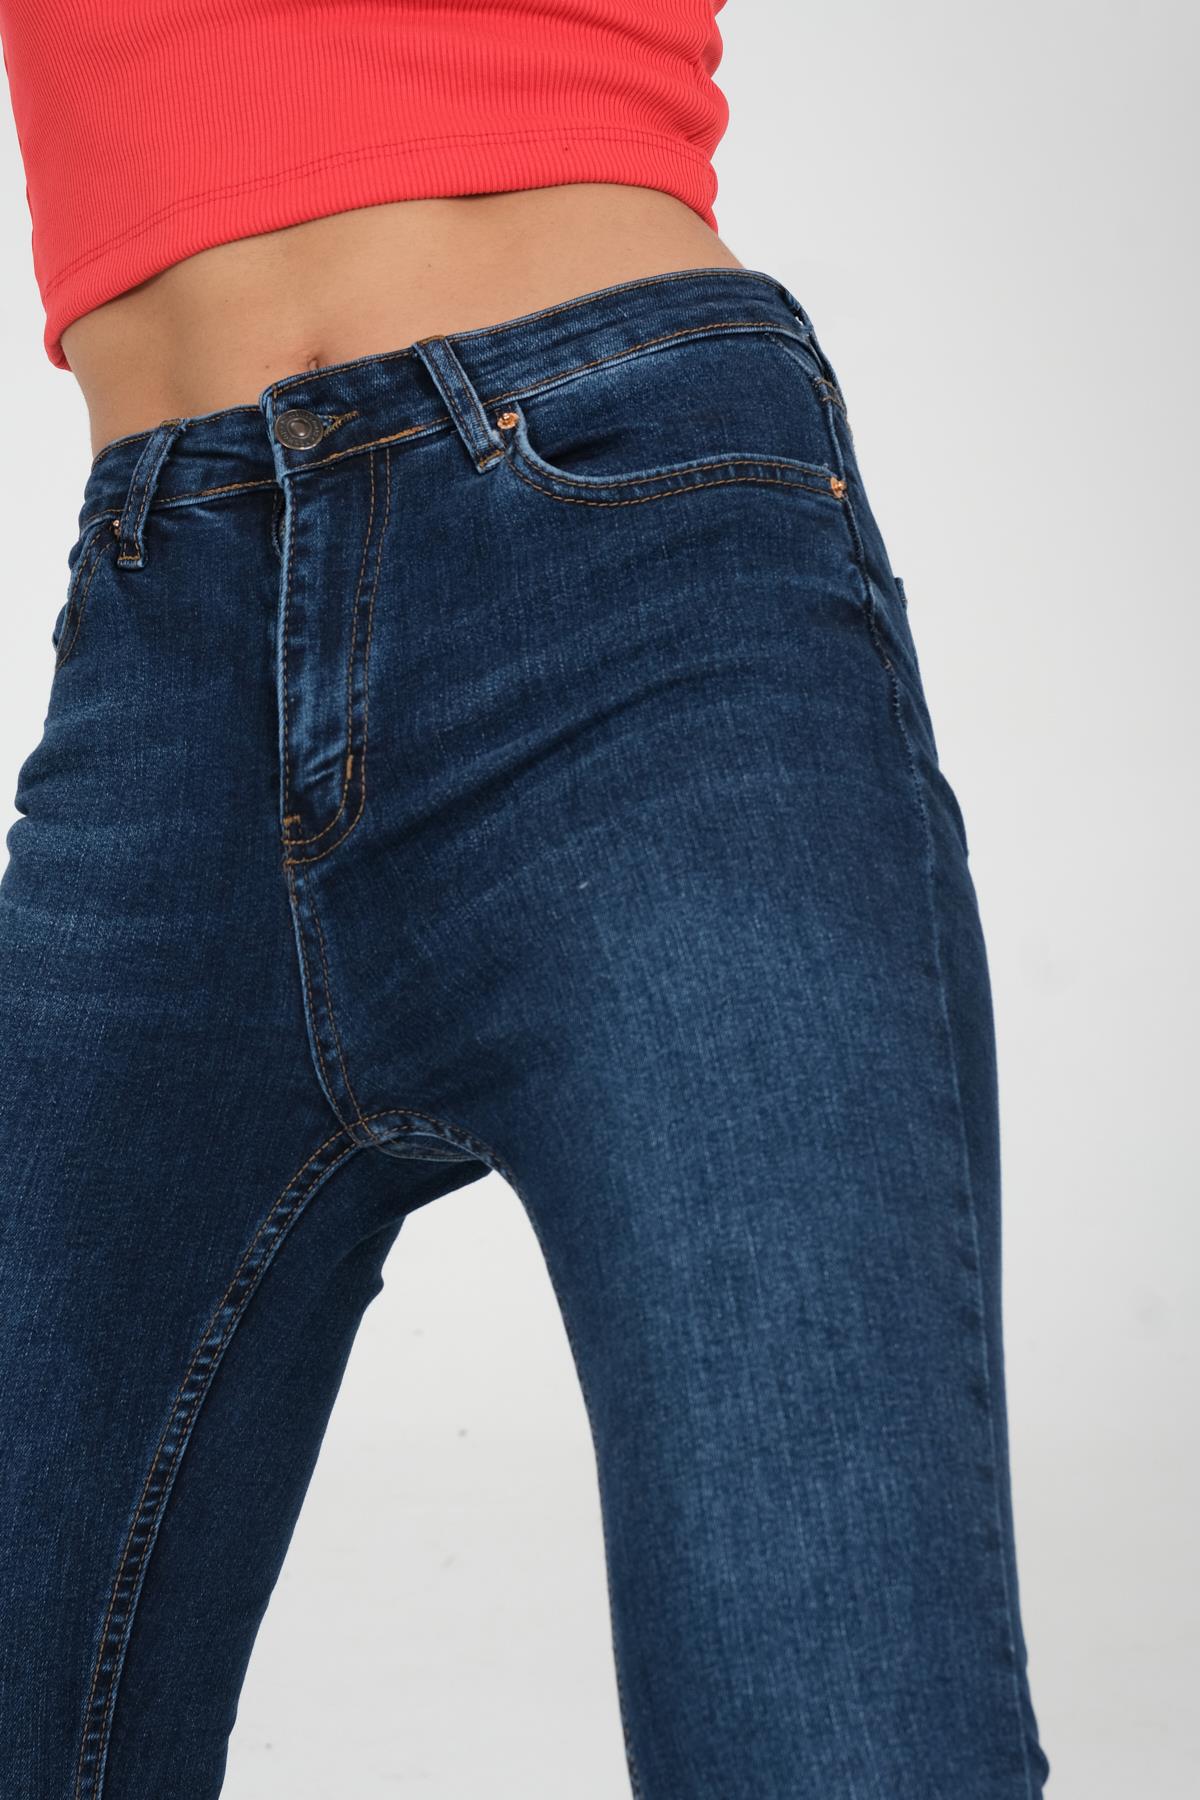 Dark Blue Indigo Skinny Jeans women denim pants